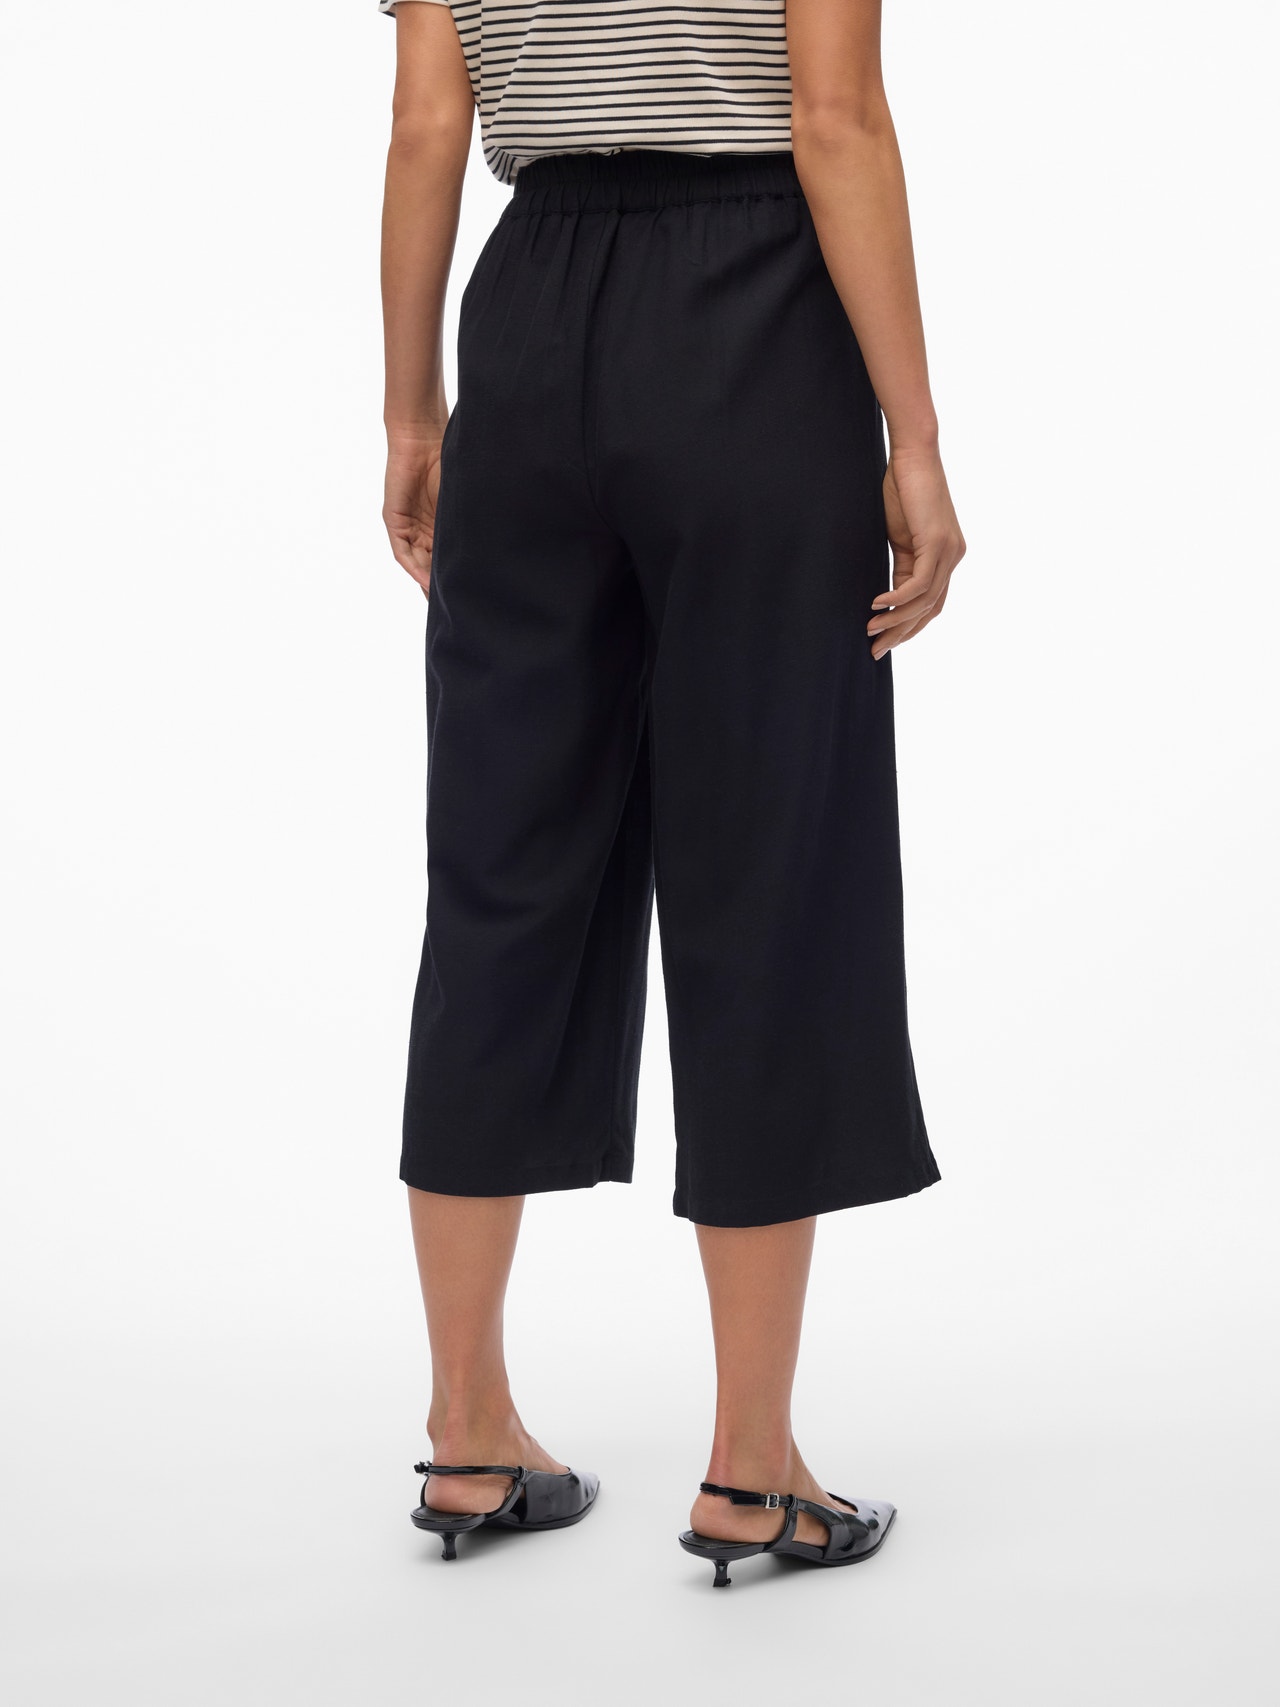 Vero Moda VMGISELLE Pantalons -Black - 10317815